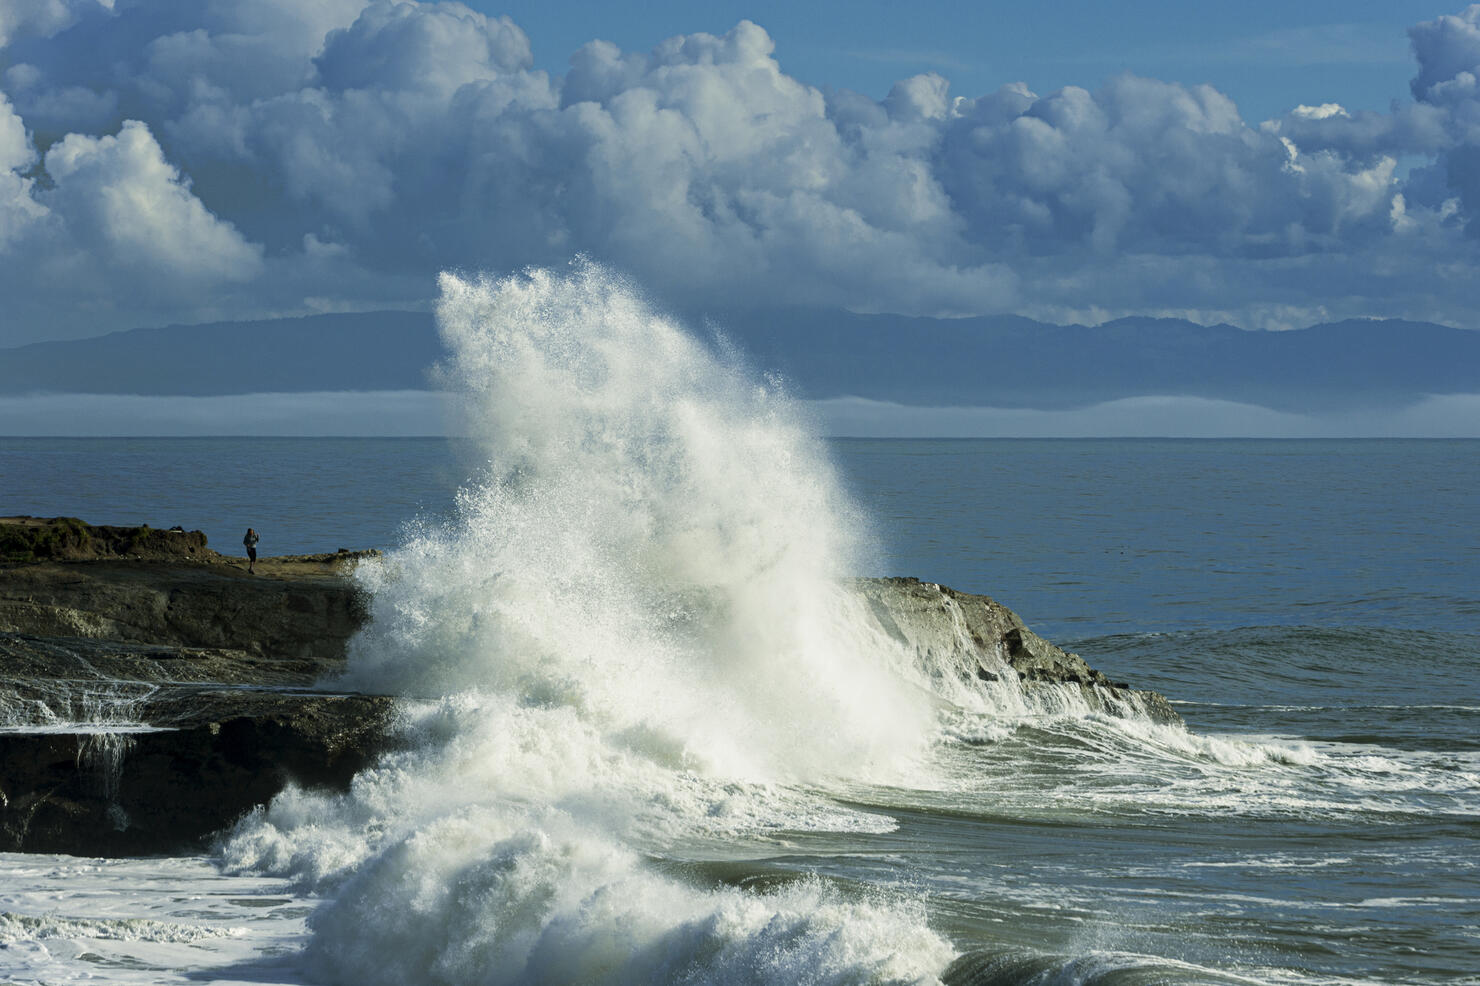 Larger Ocean Wave Crashing On Rocky Shore